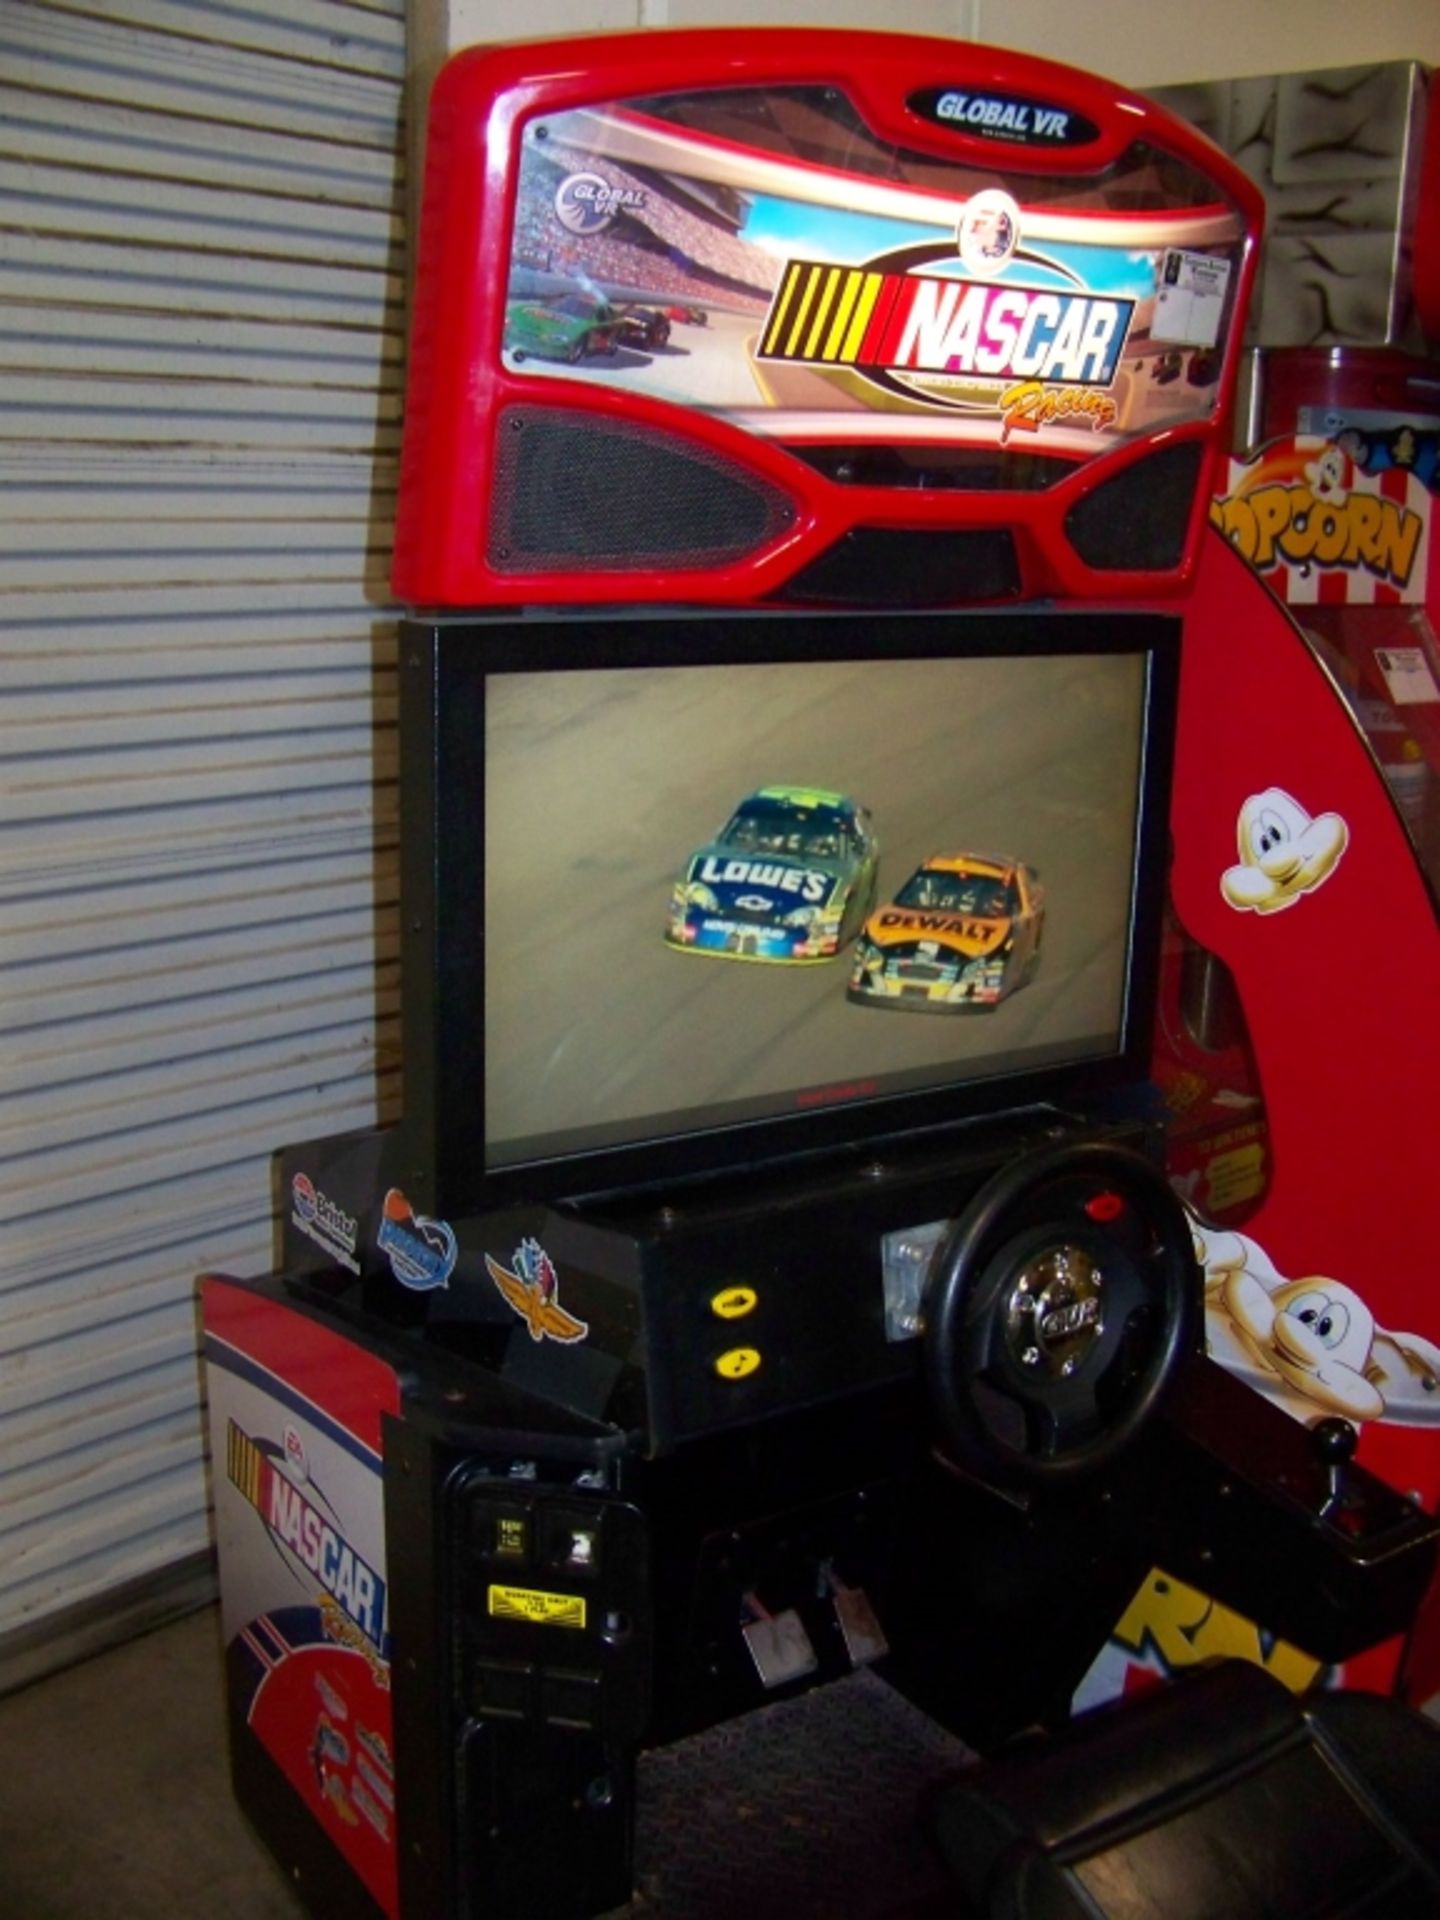 NASCAR RACING ARCADE GAME GLOBAL VR 32" LCD - Image 5 of 7